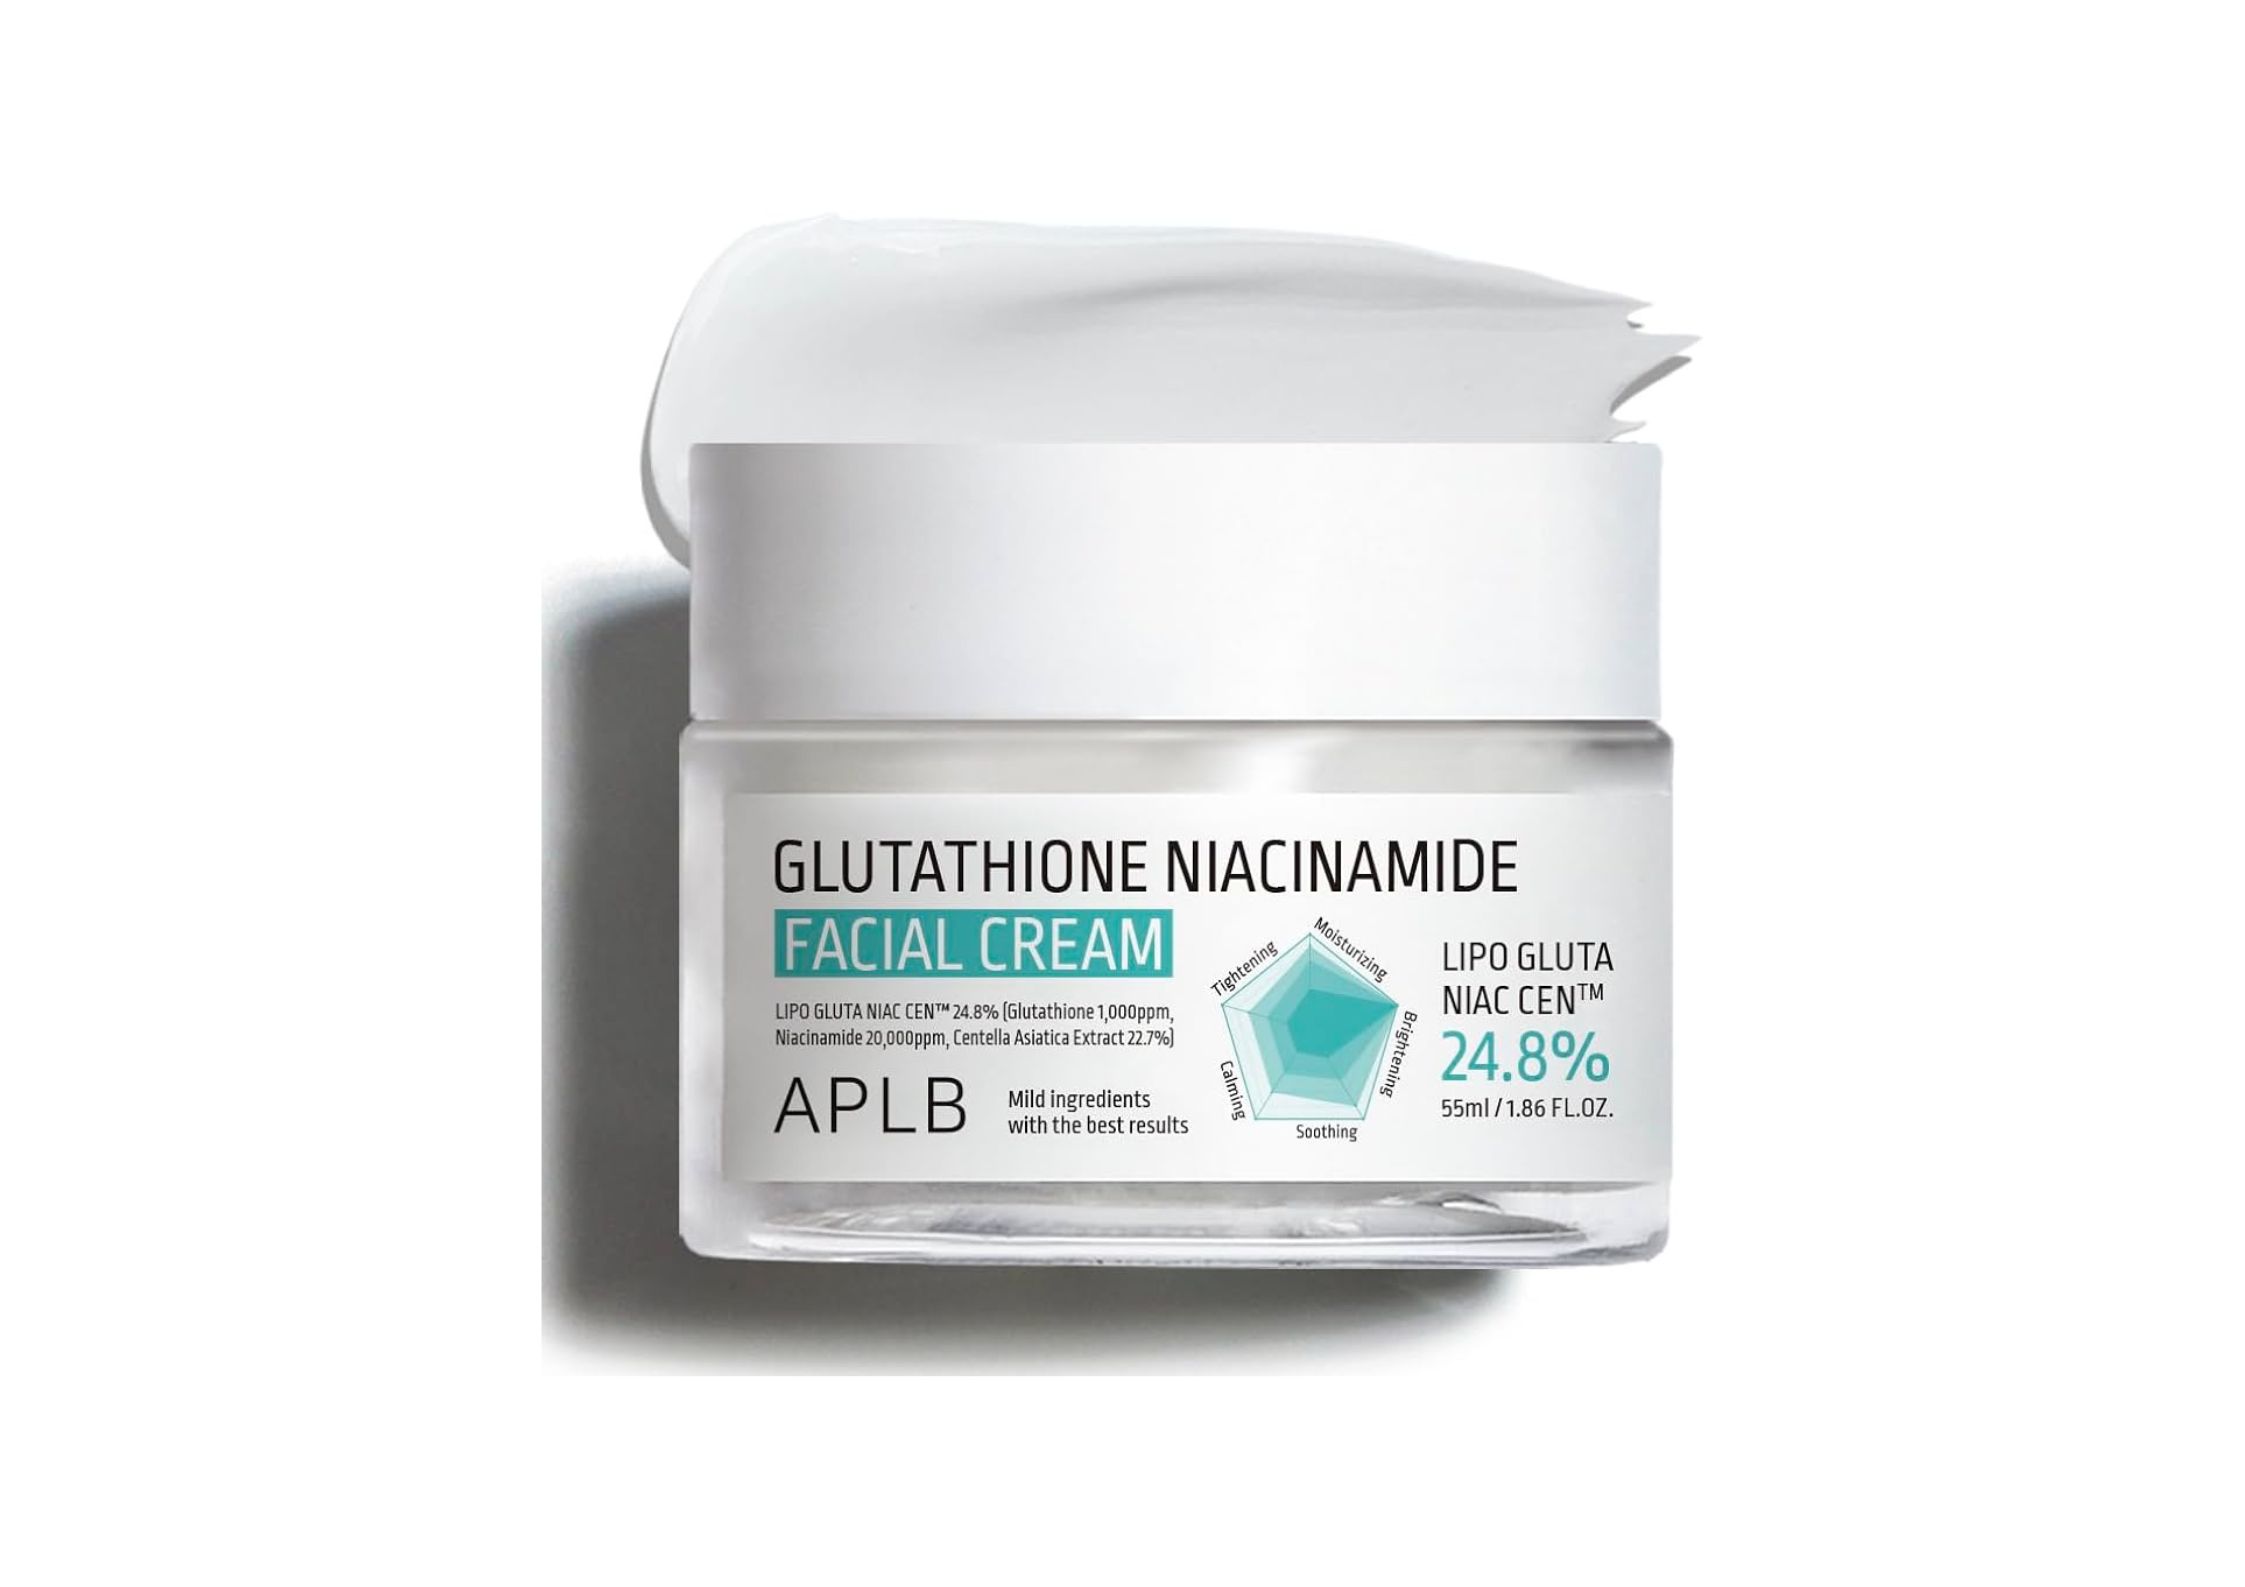 Kem dưỡng trắng da Hàn Quốc - APLB Glutathione Niacinamide Facial Cream (Ảnh: Internet).